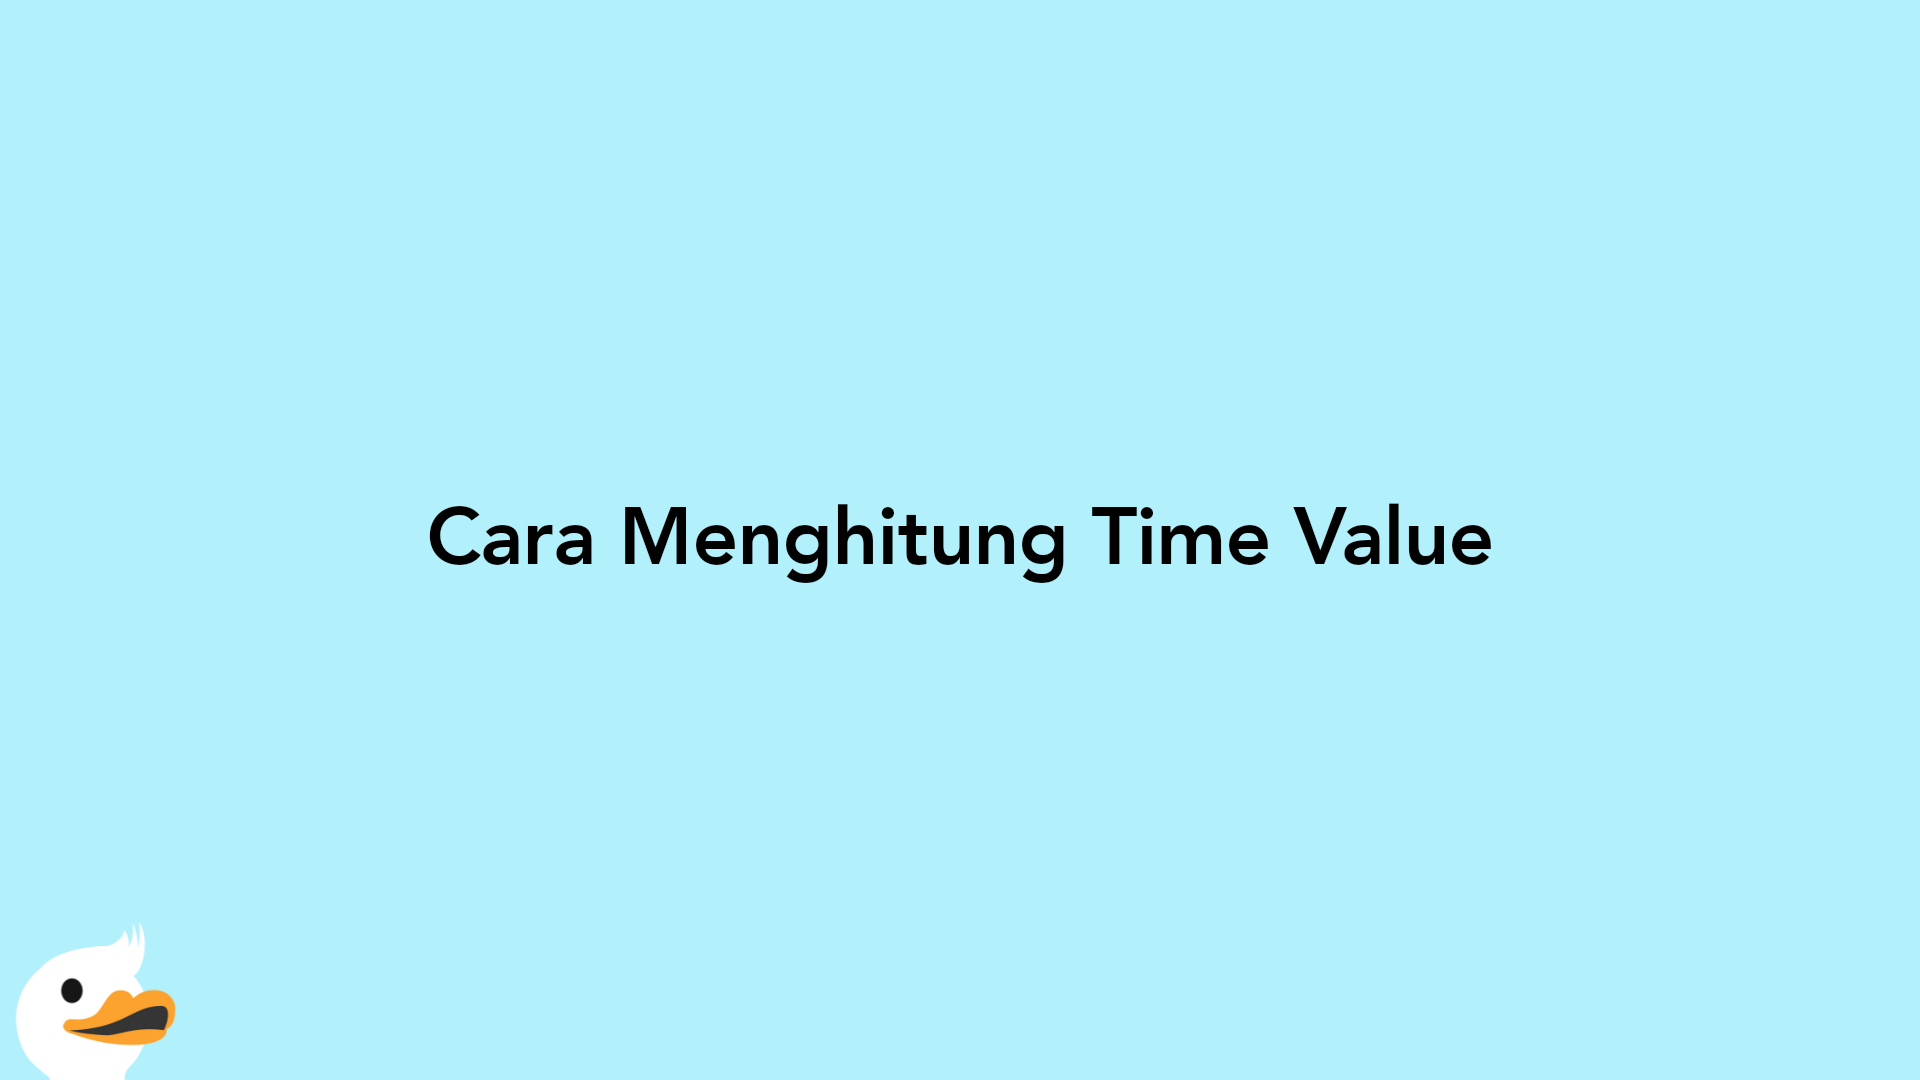 Cara Menghitung Time Value